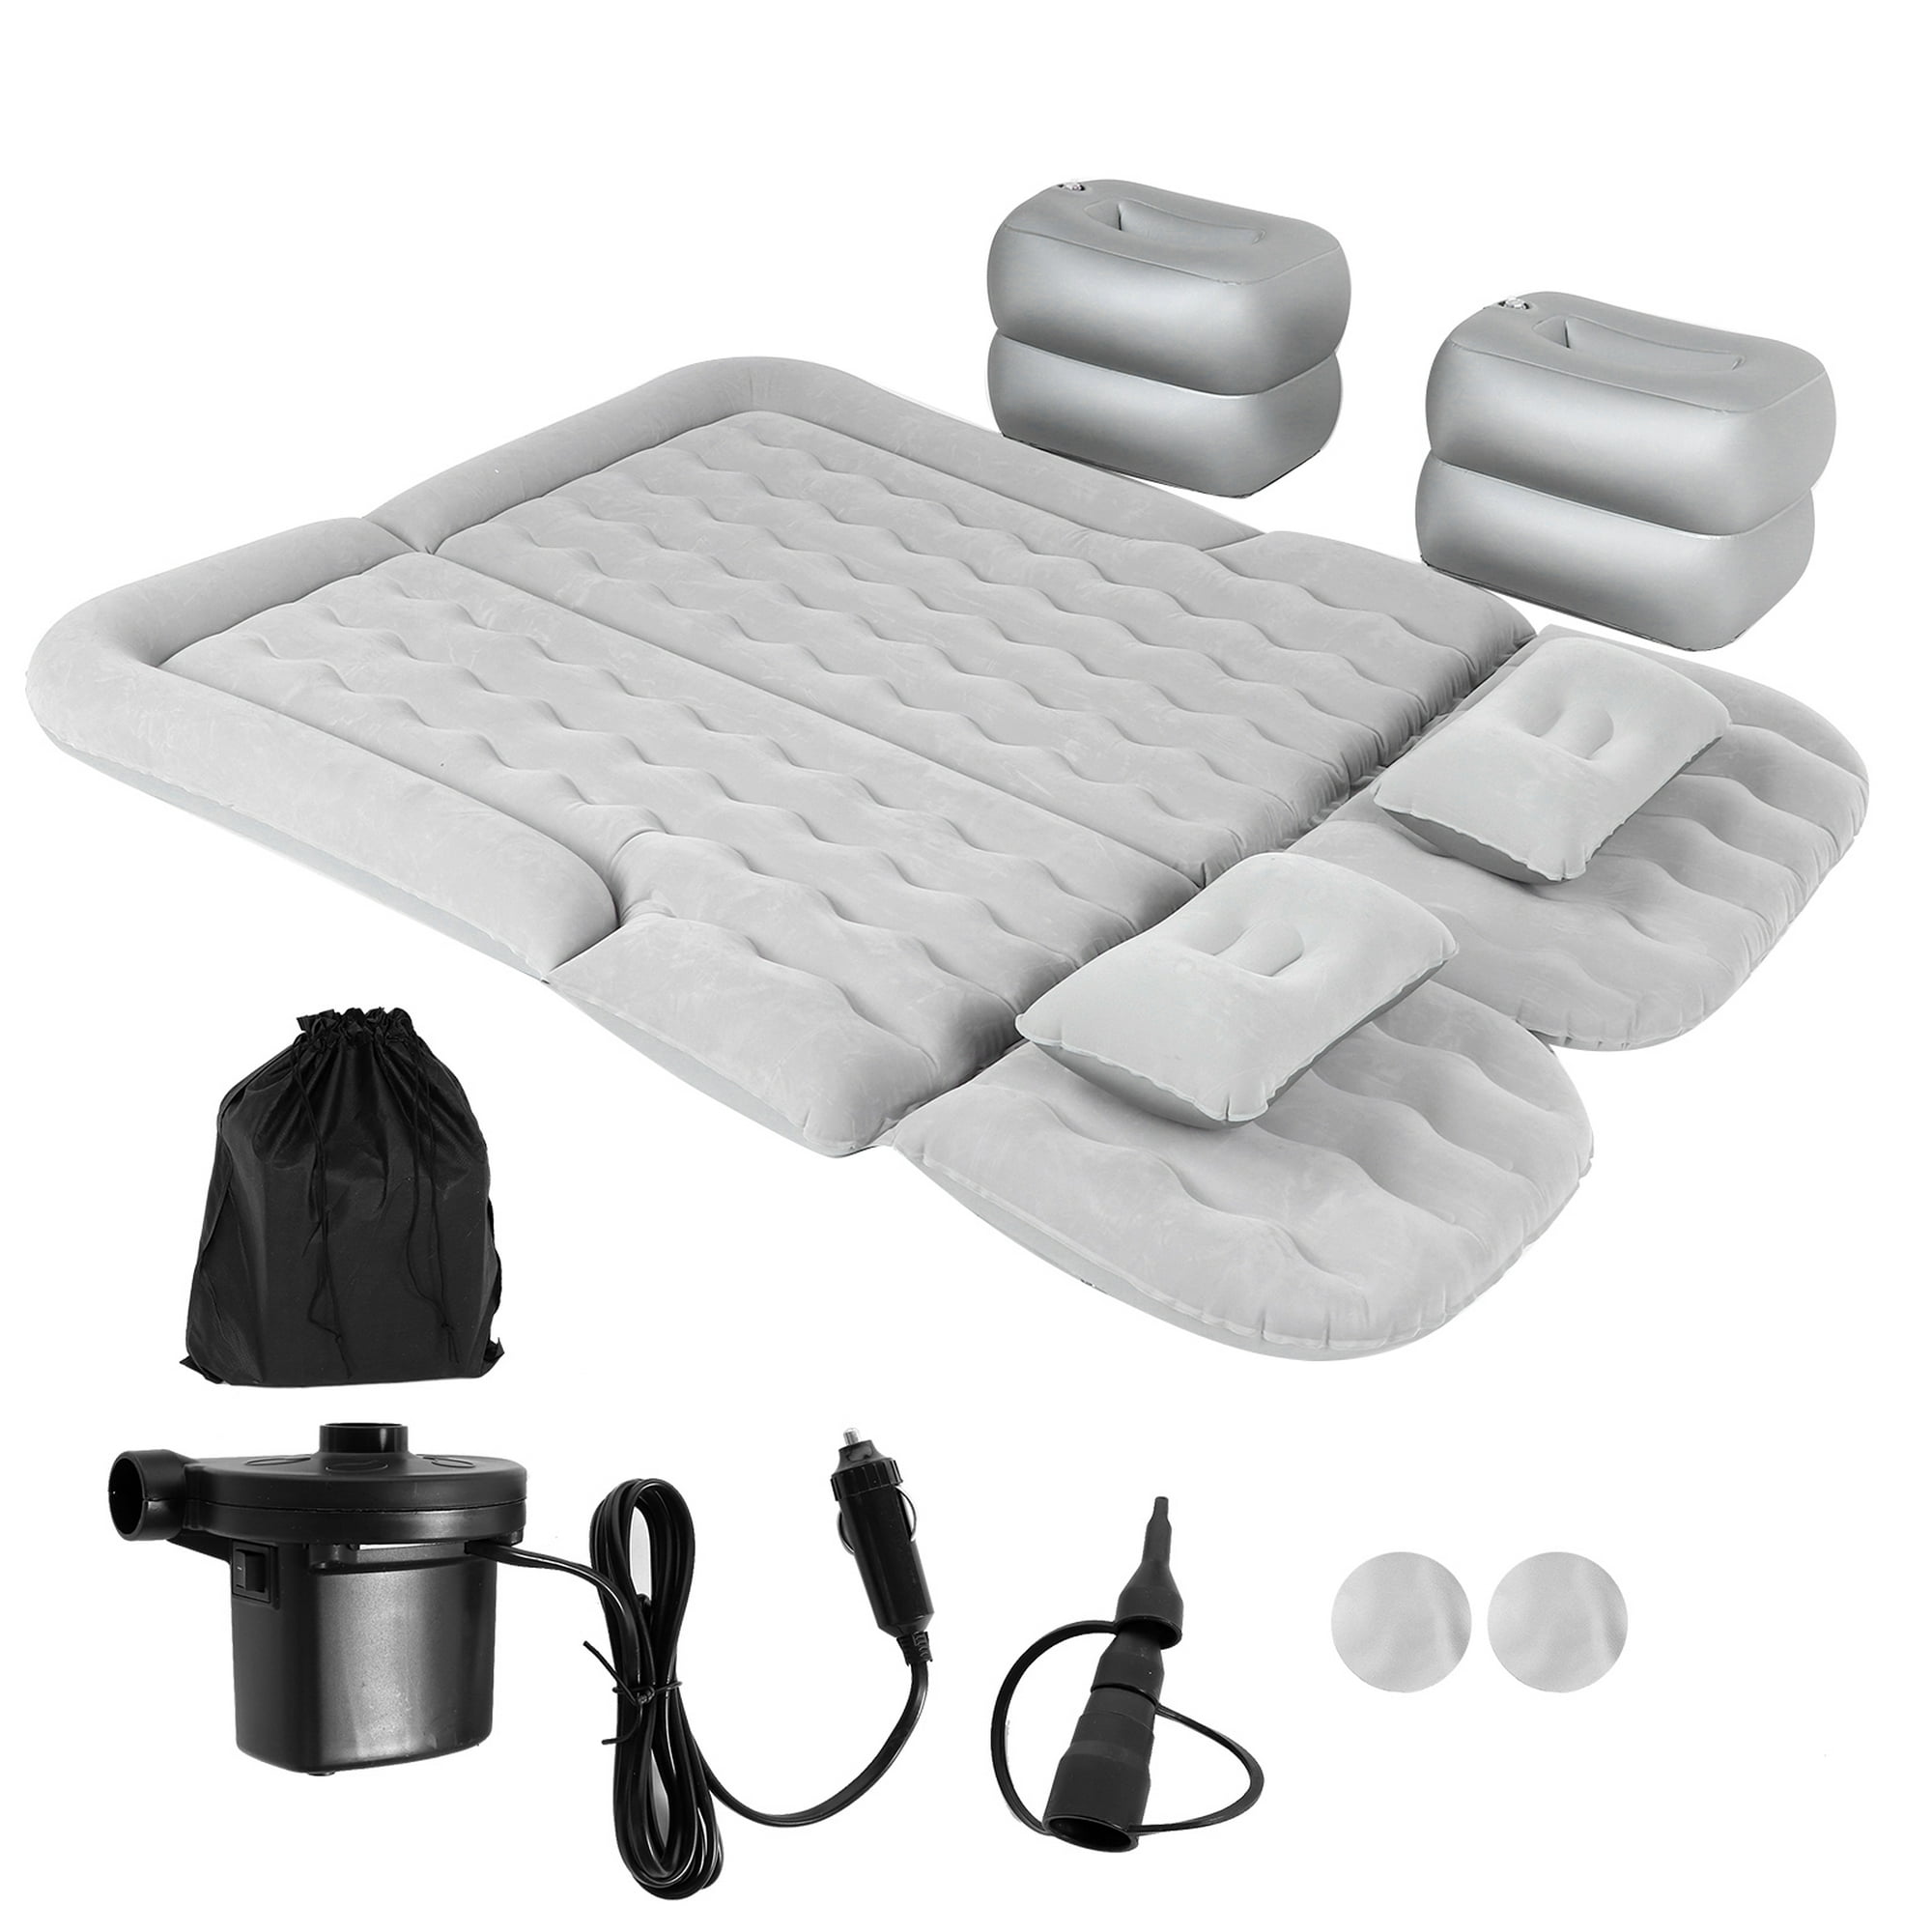 Colchón hinchable color gris Kit completo de cama inflable para